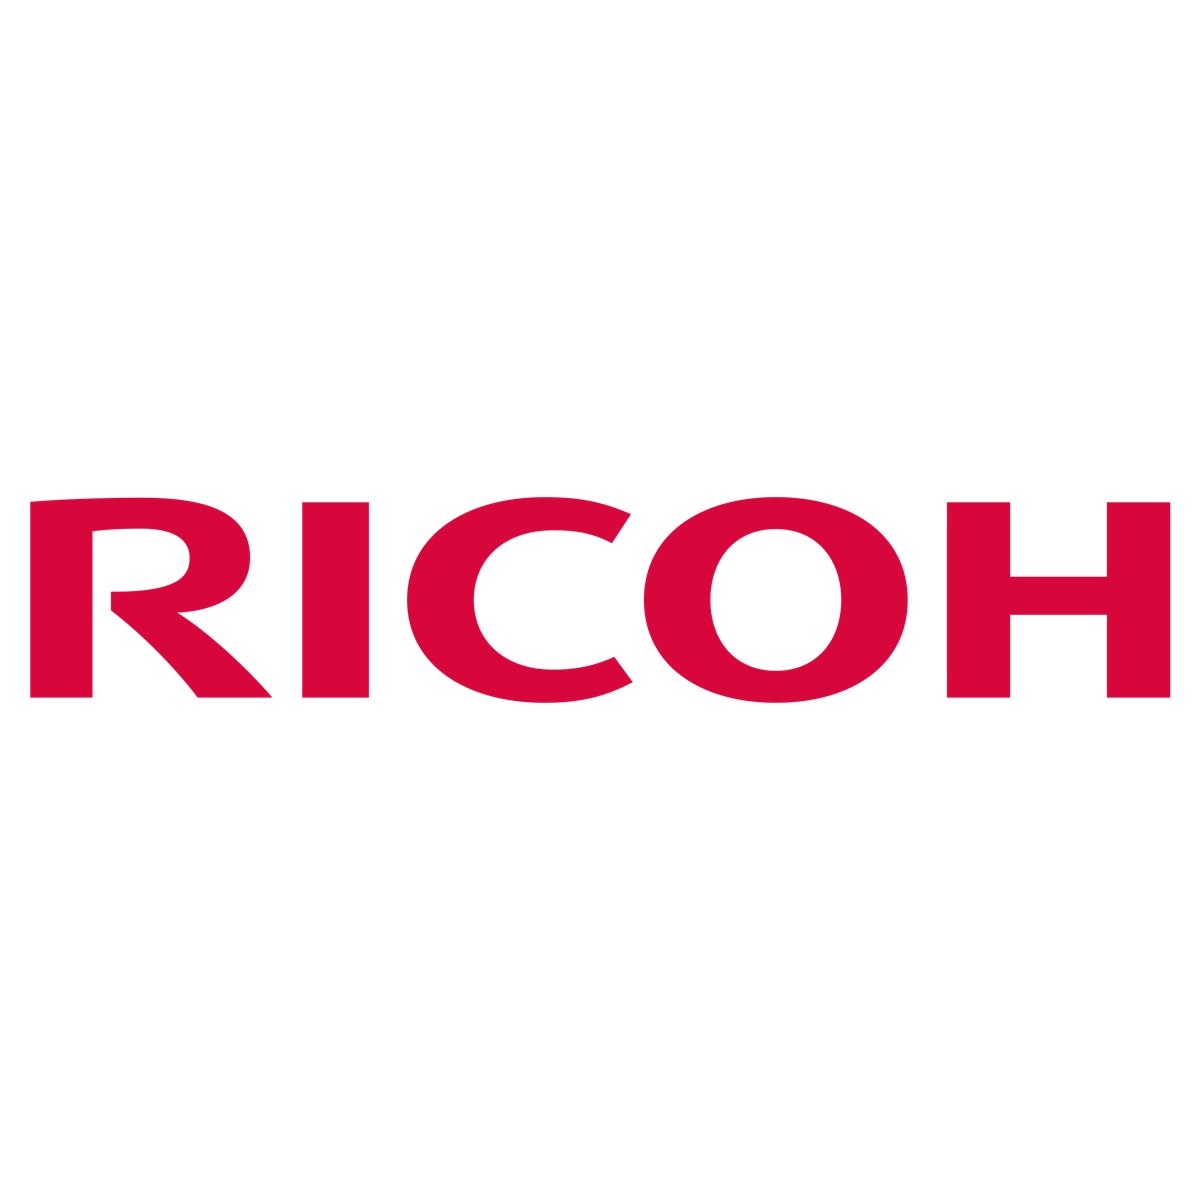 Ricoh D1170-127 - MP C305 - Trommeleinheit magenta - 24,000 sheet